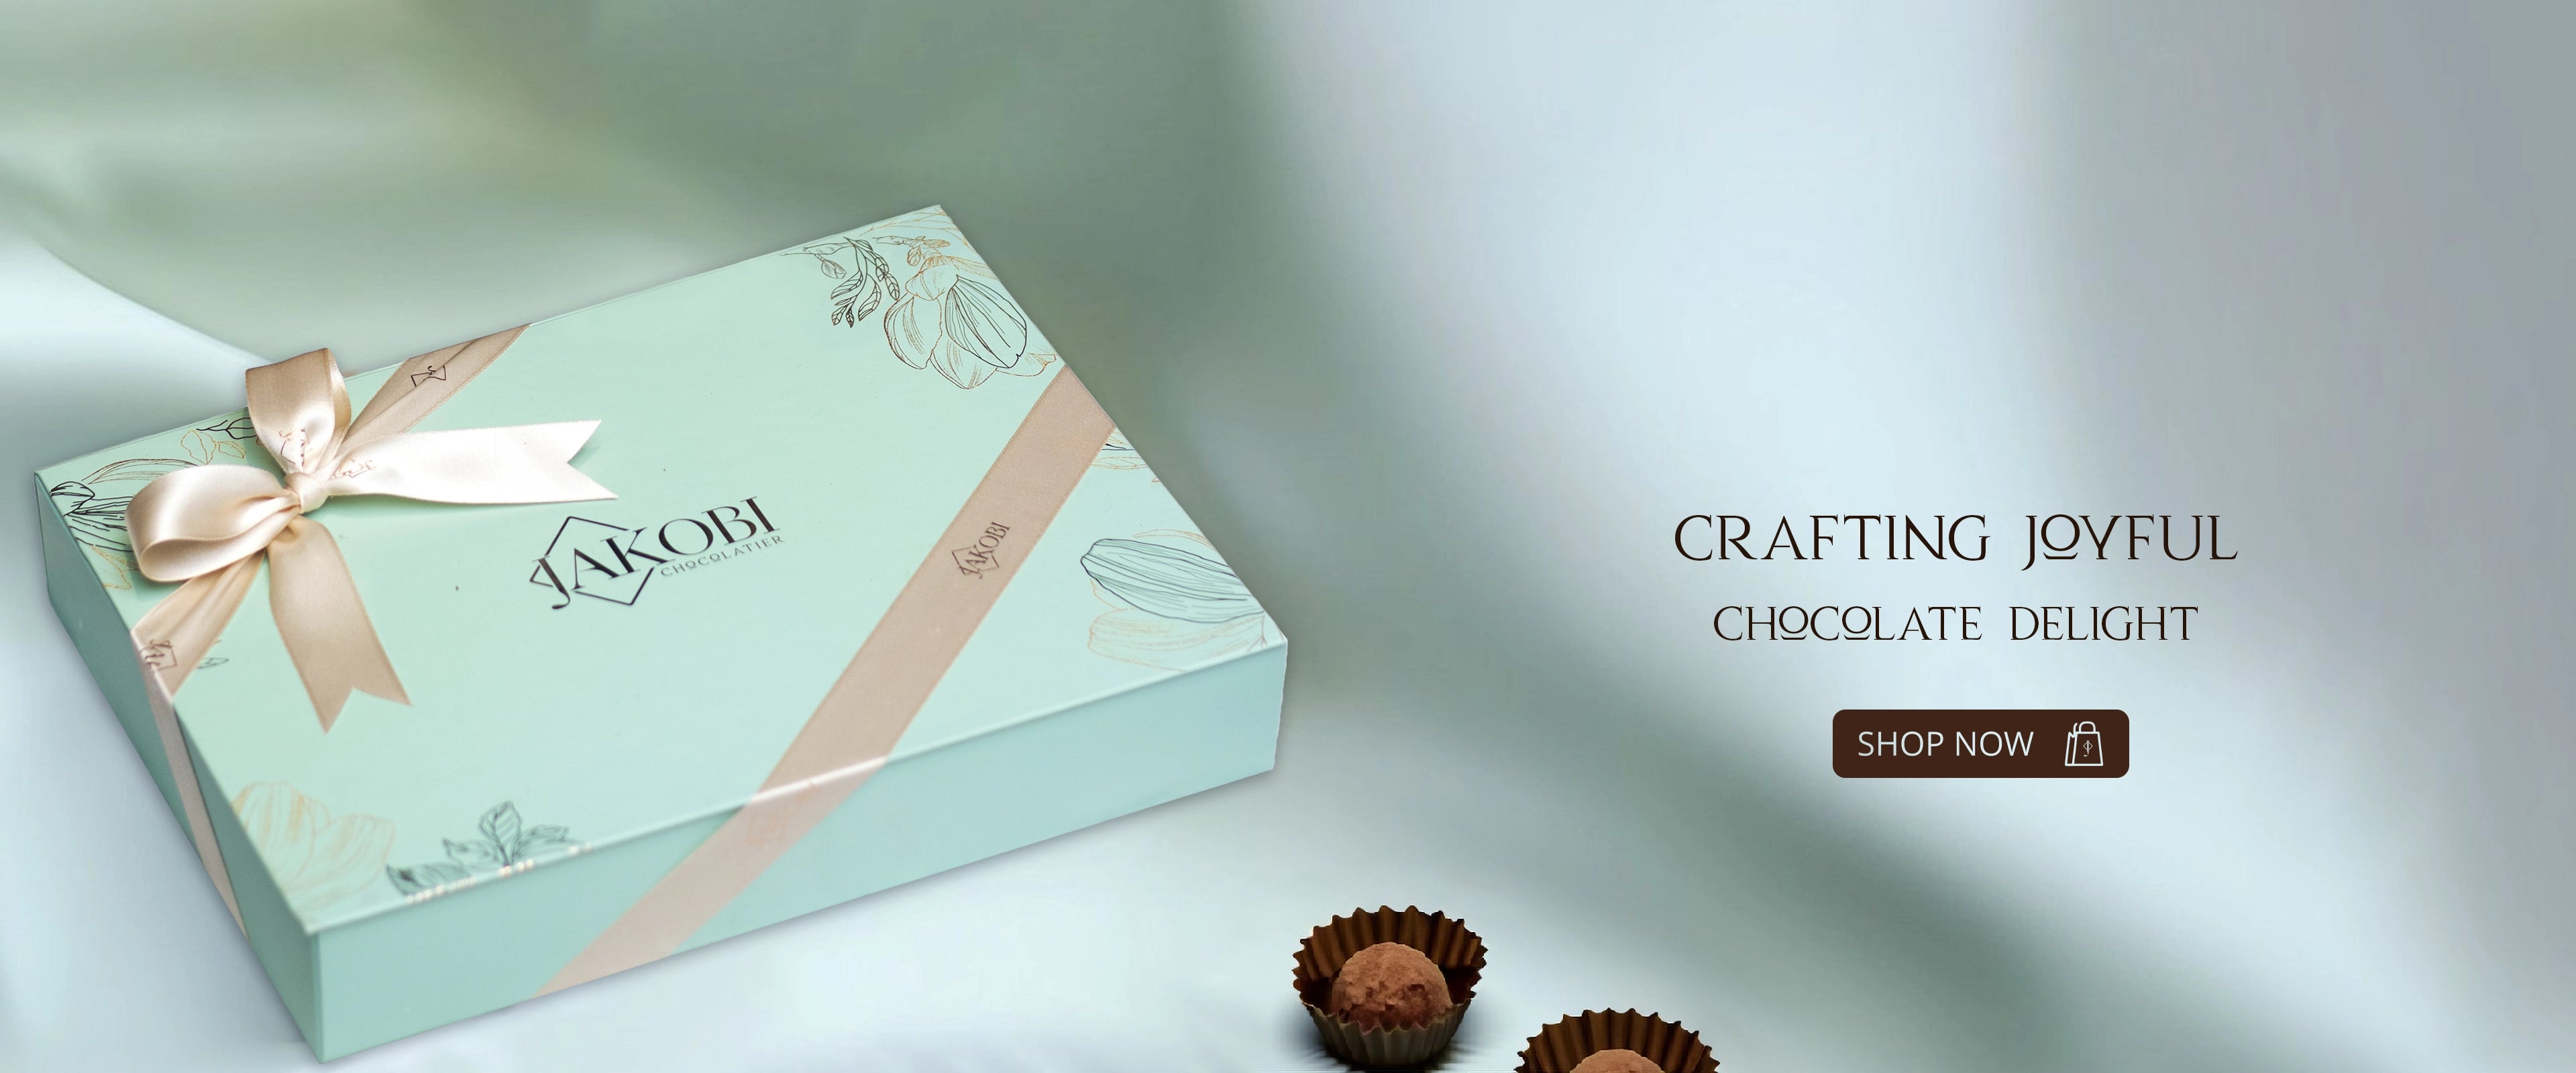 Jakobi Chocolatier - Crafting Joyful Chocolate Delight